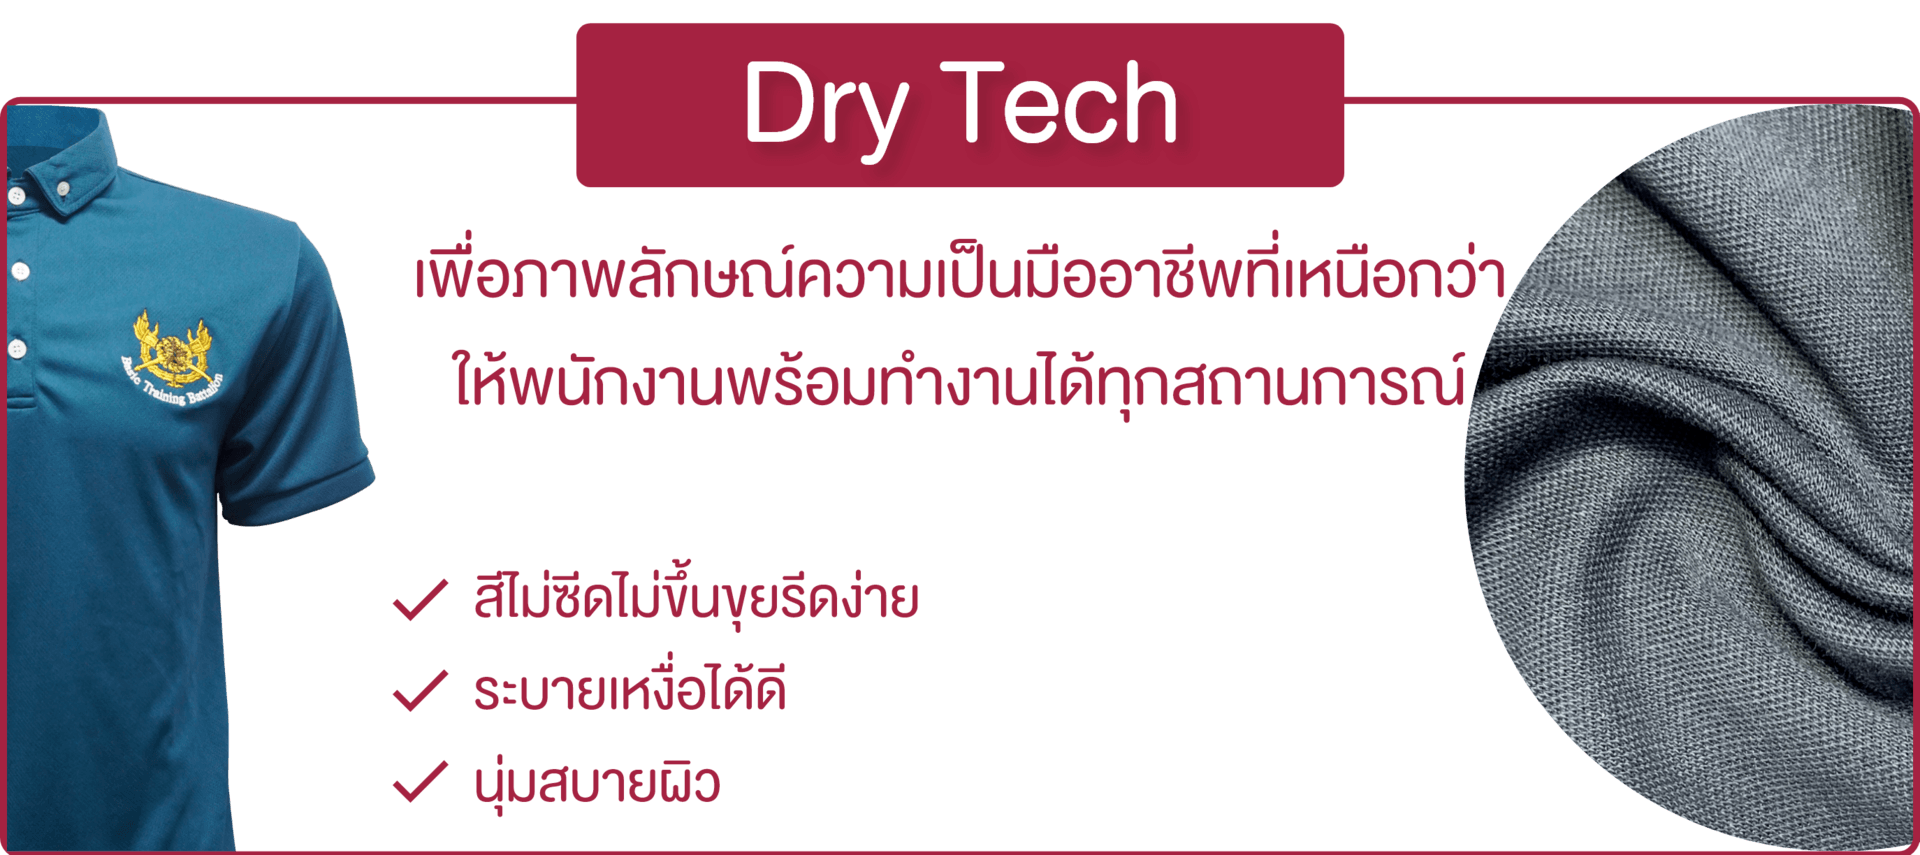 dry tech cover